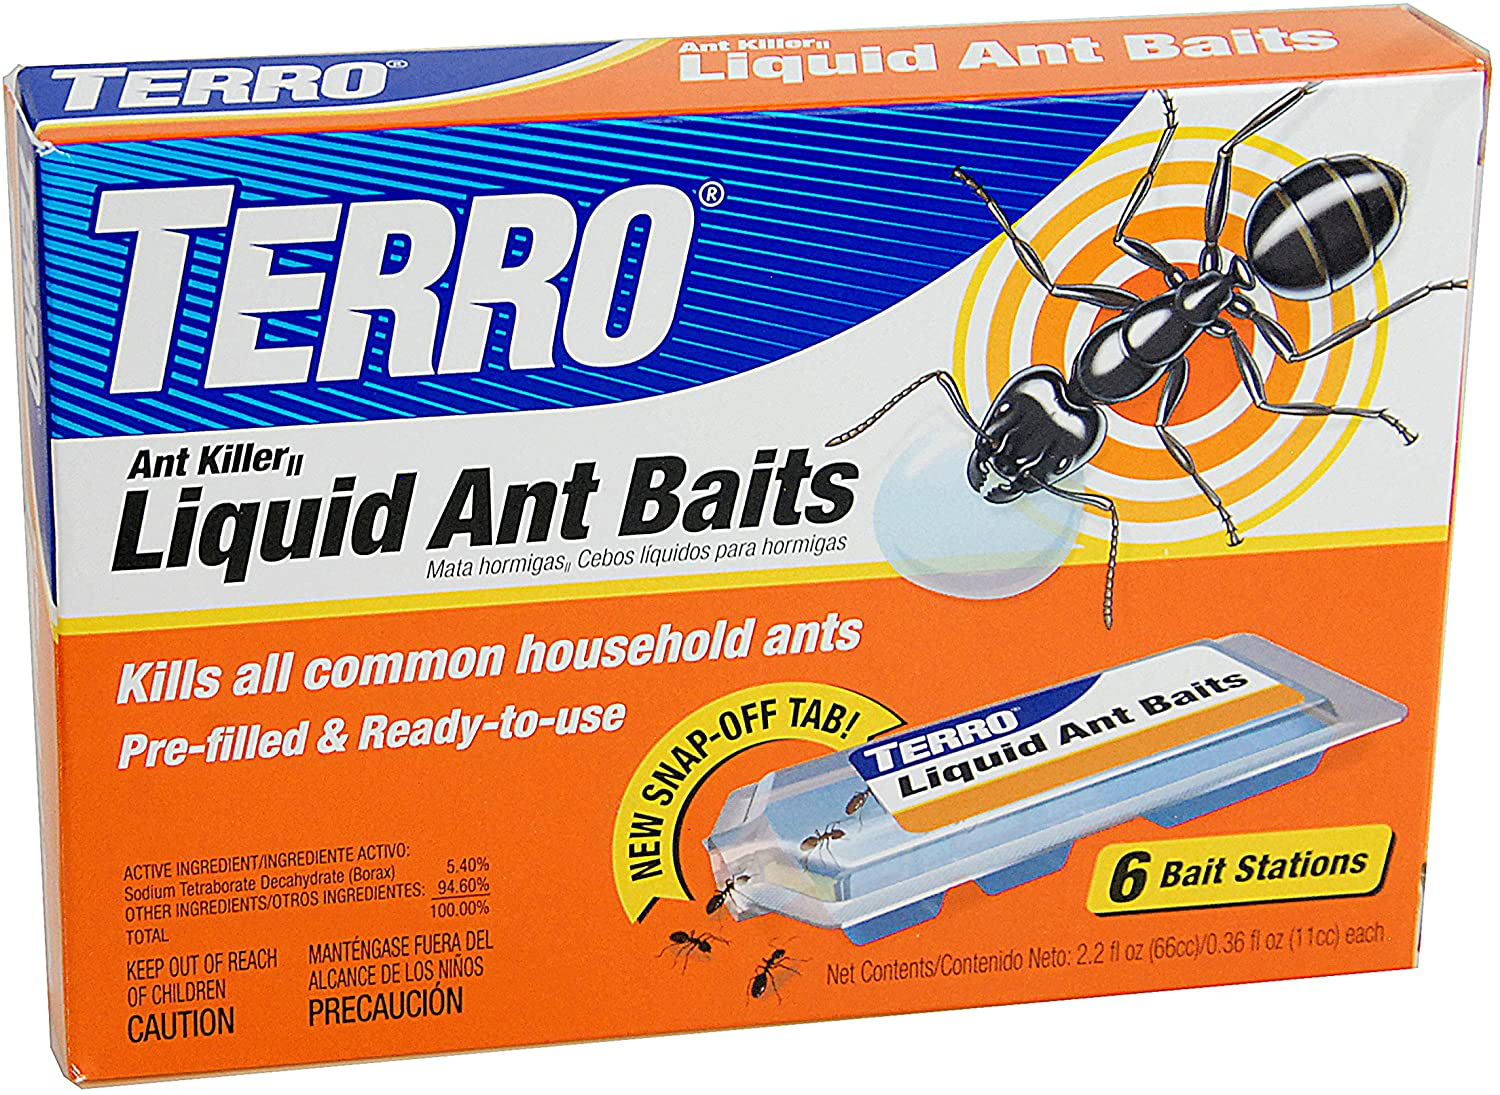 TERRO 102814 755505 T300 Liquid Ant Baits-1 Pack, 6 Stations